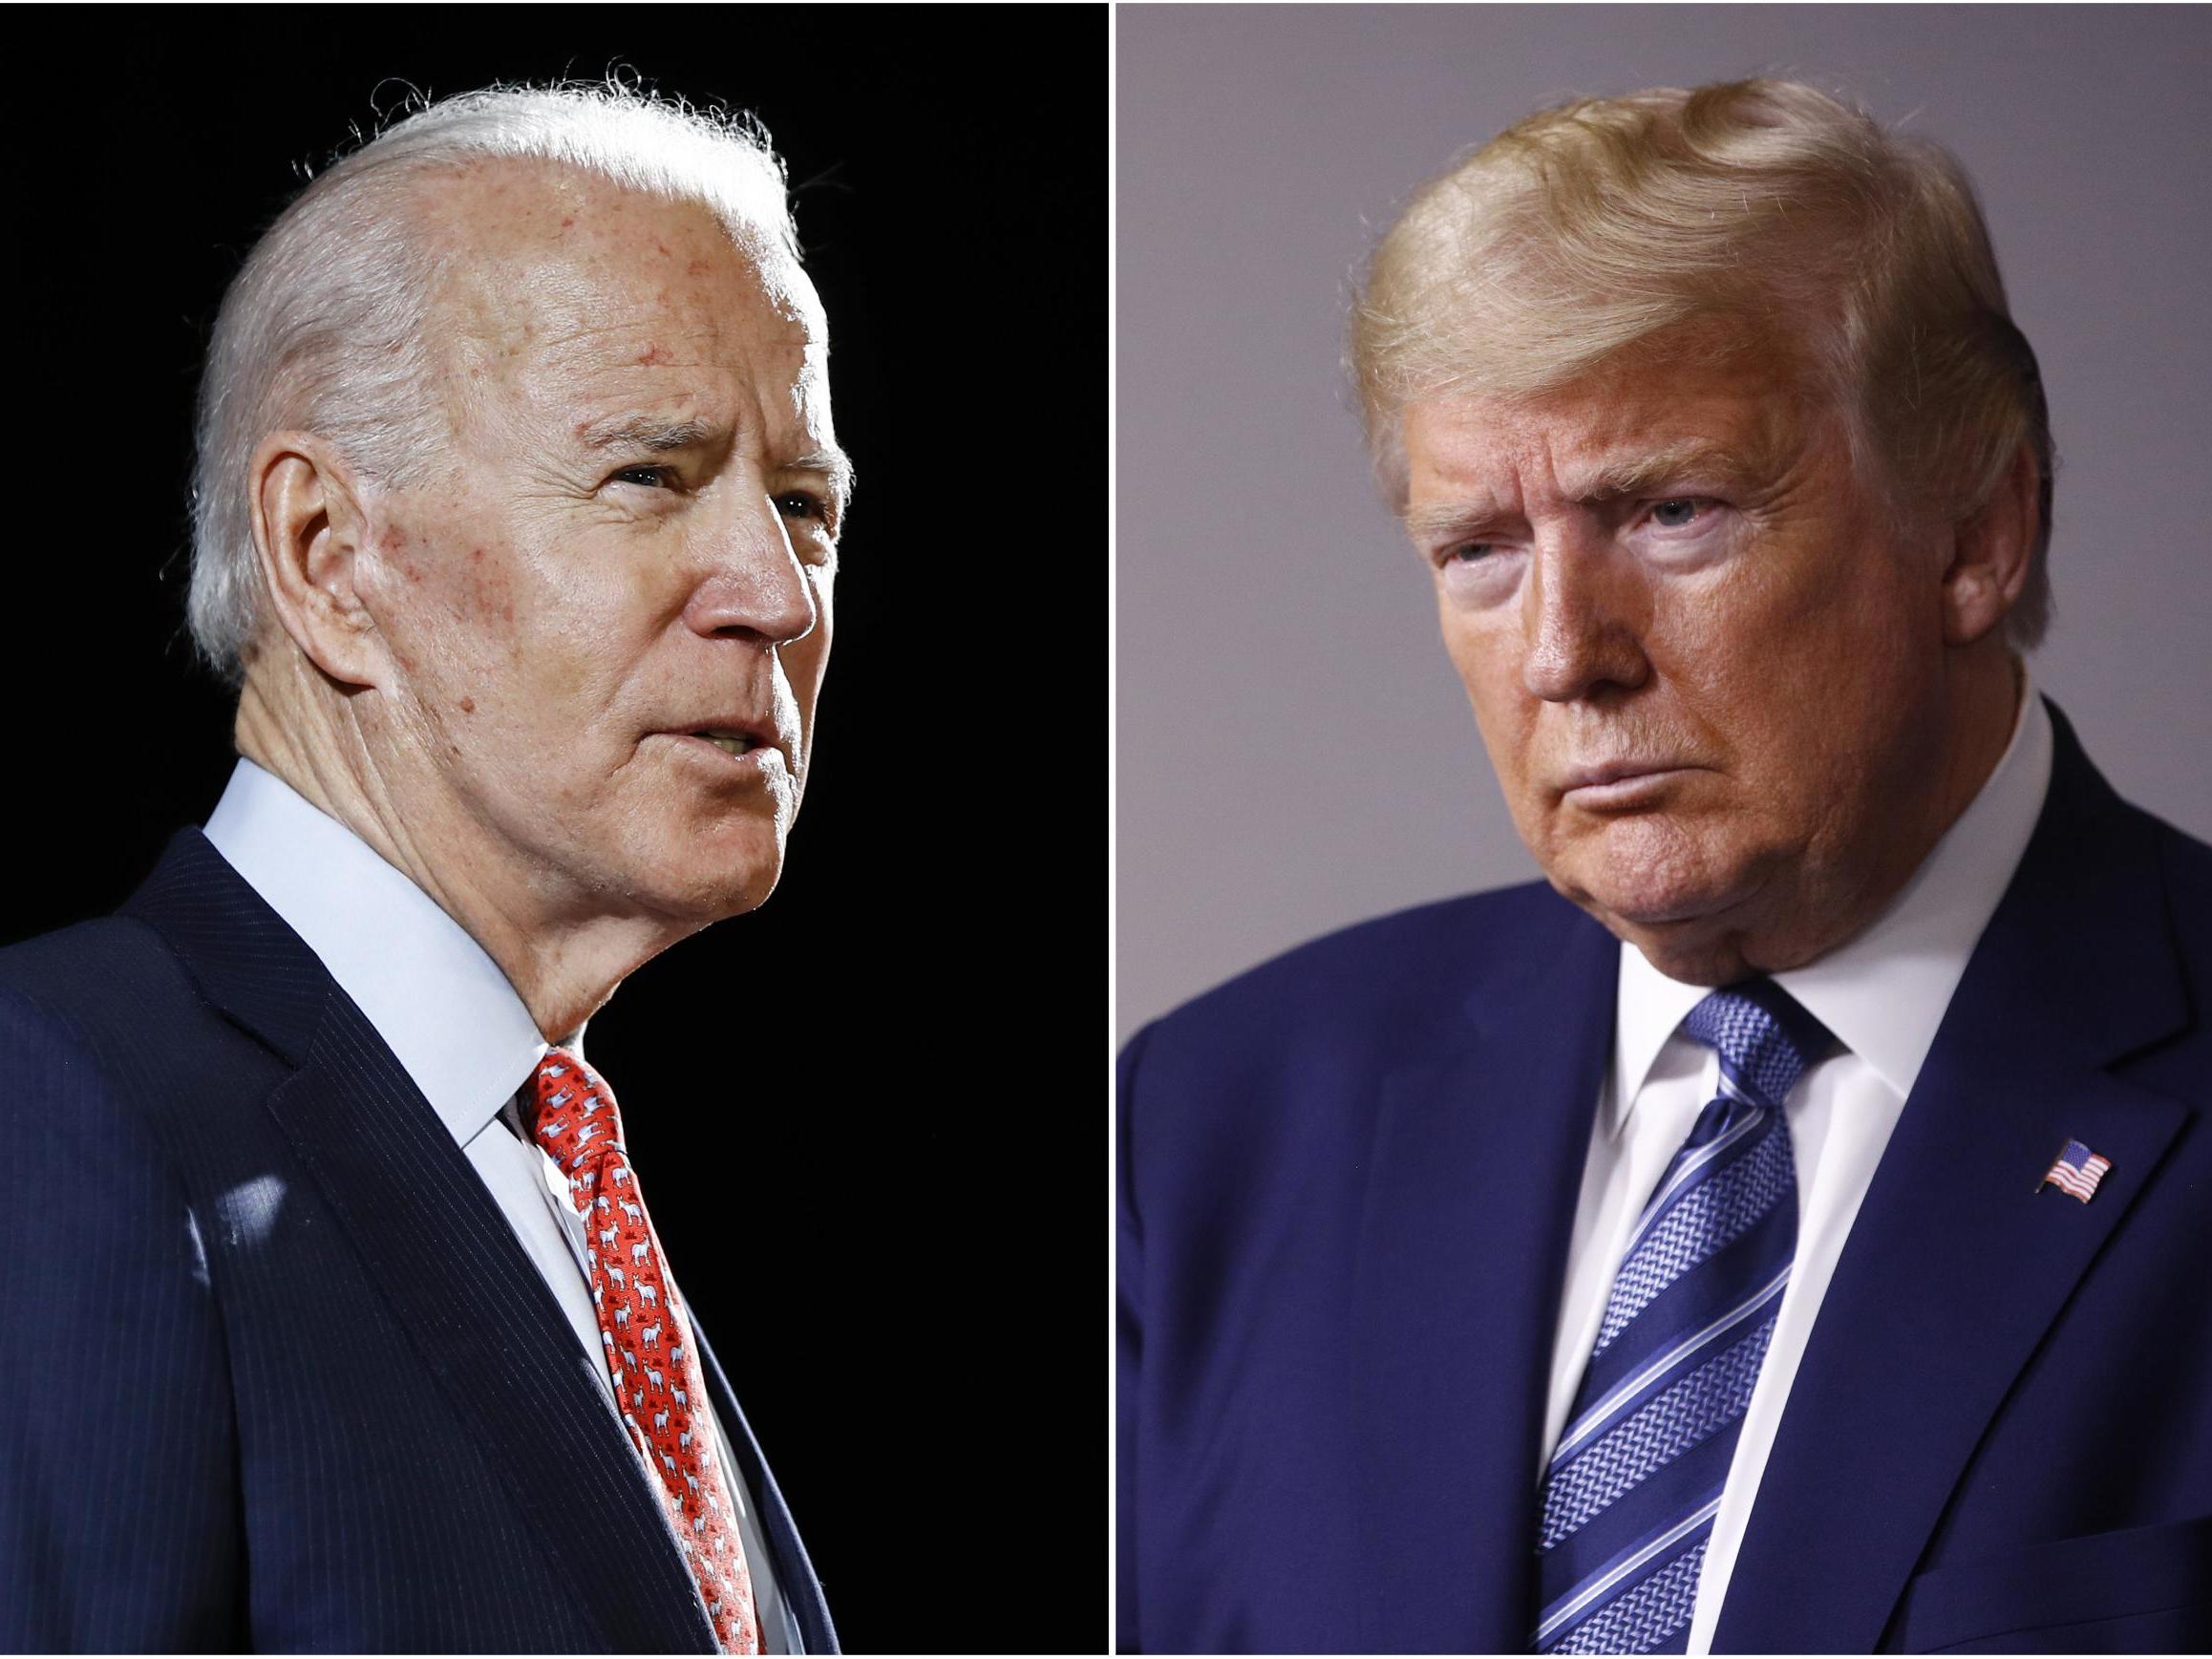 Biden appears to lengthen lead over Trump despite sex assault allegations, new poll finds